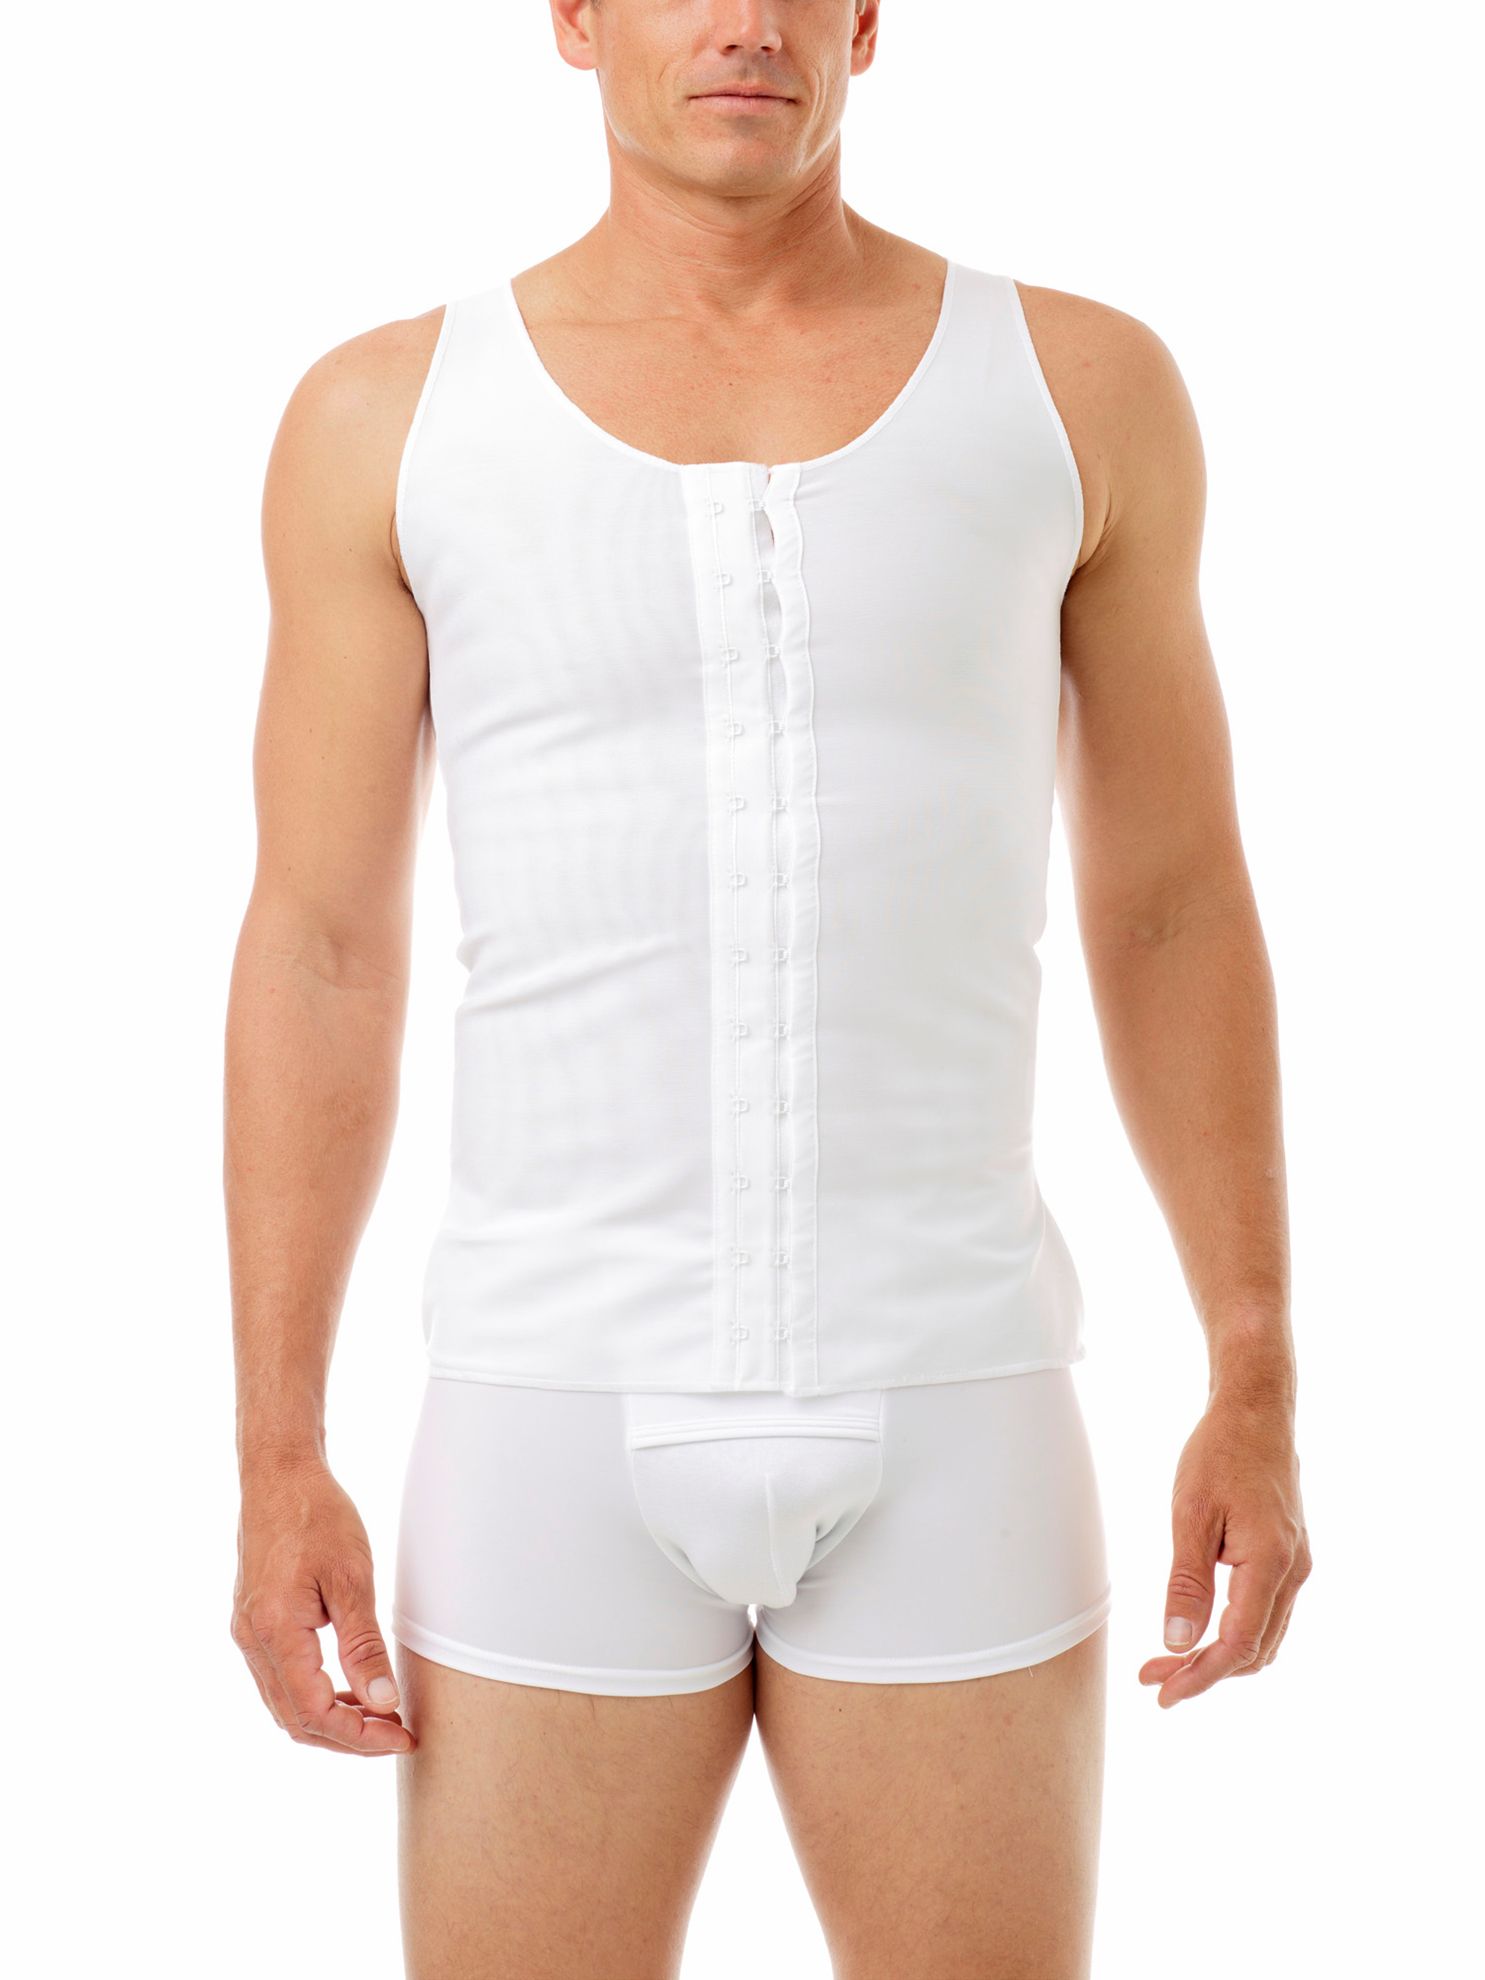 mens compression shirt chest